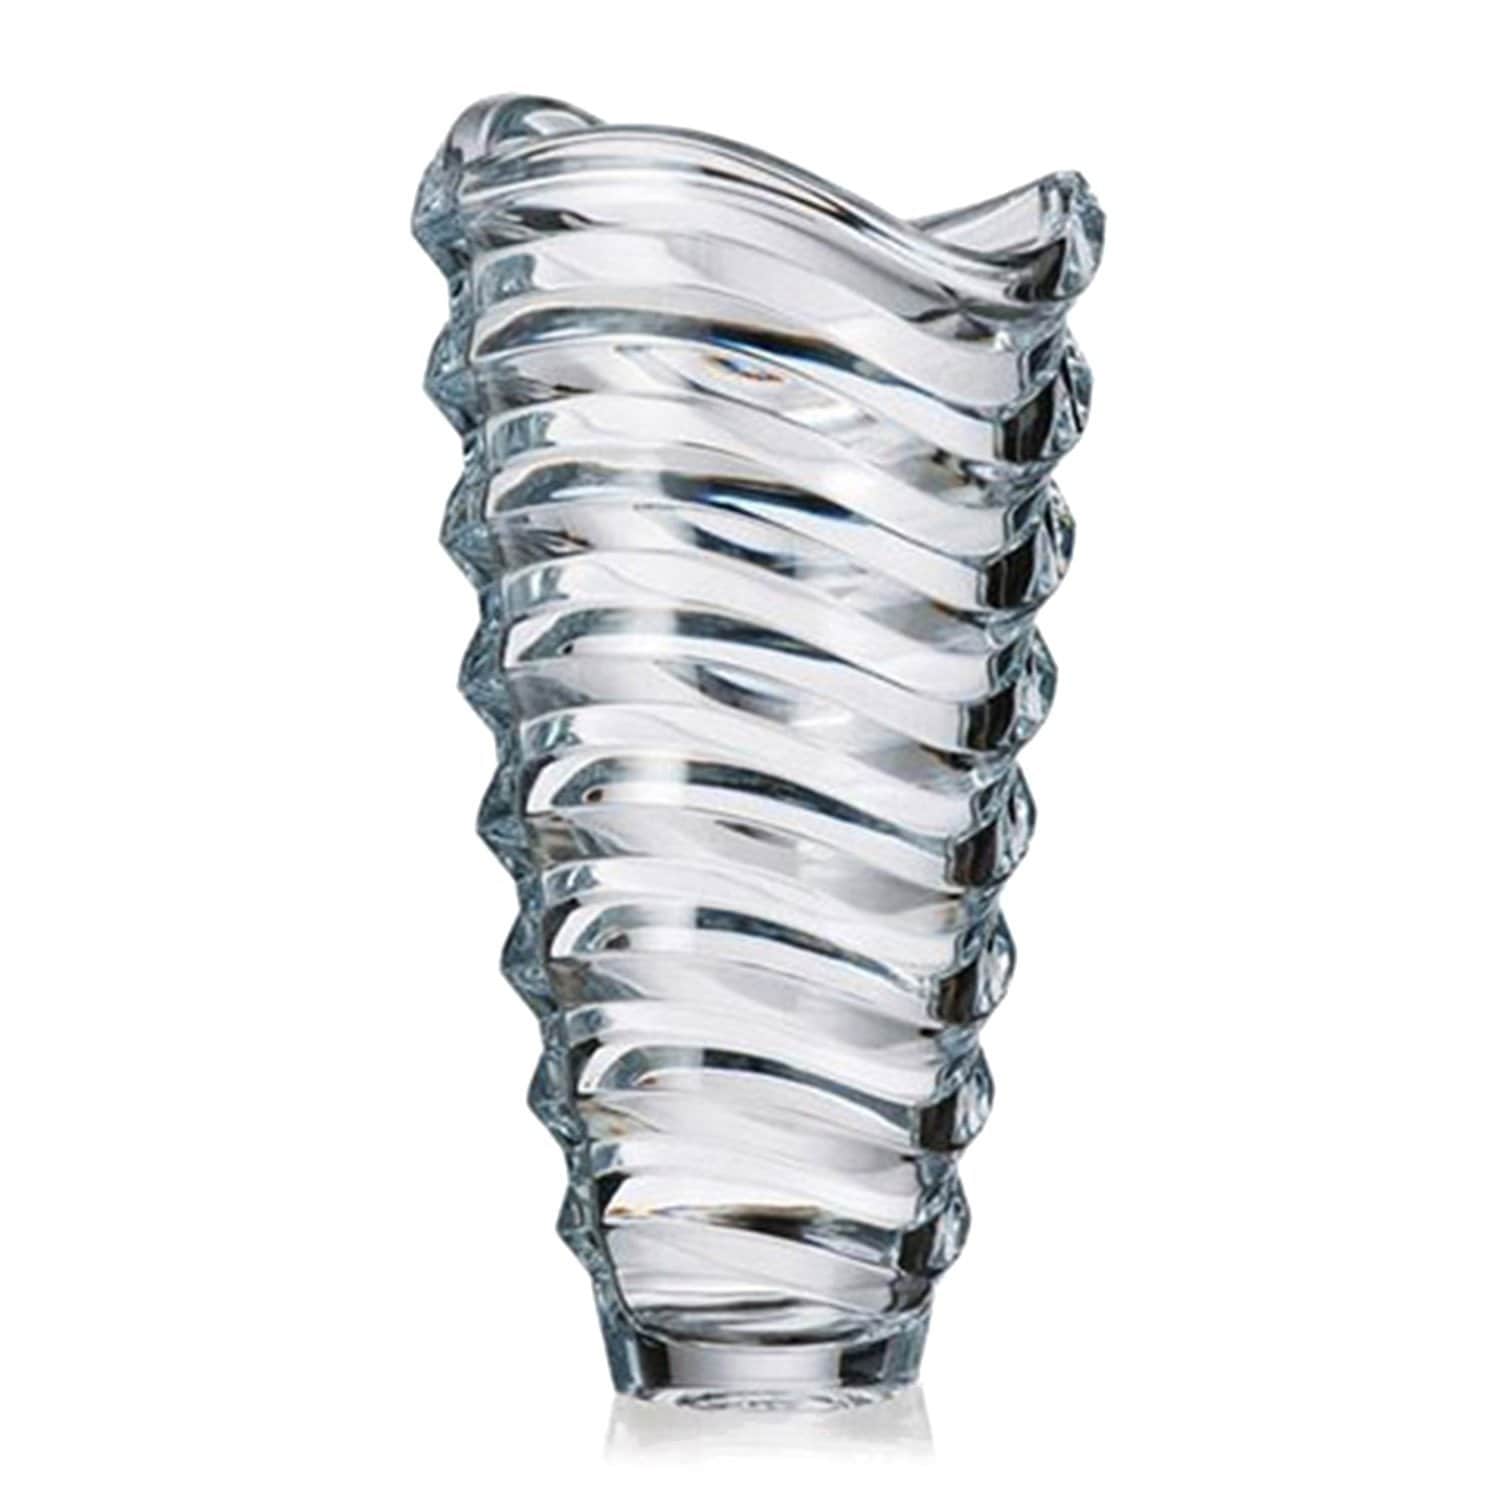 Bohemia Crystal Glass 8K Wave Vase - 34 cm - 5391202 - Jashanmal Home